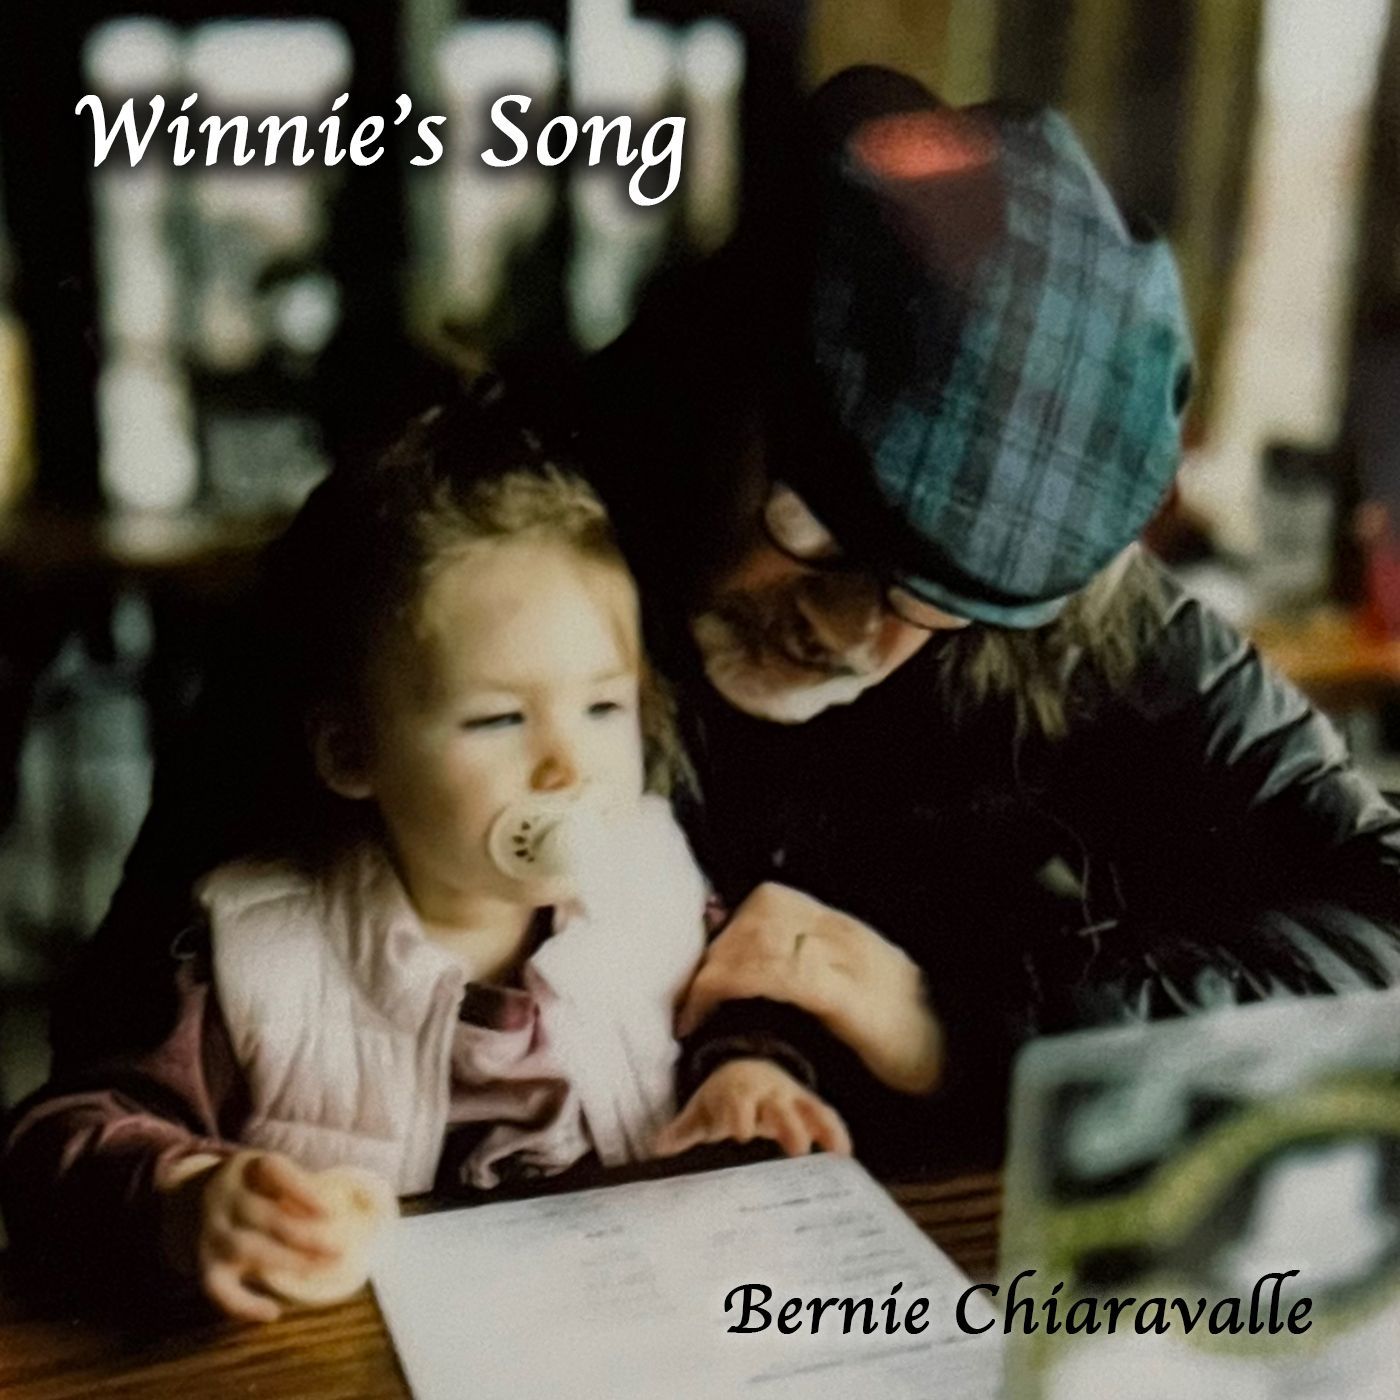 Winnie's Song by Bernie Chiaravalle